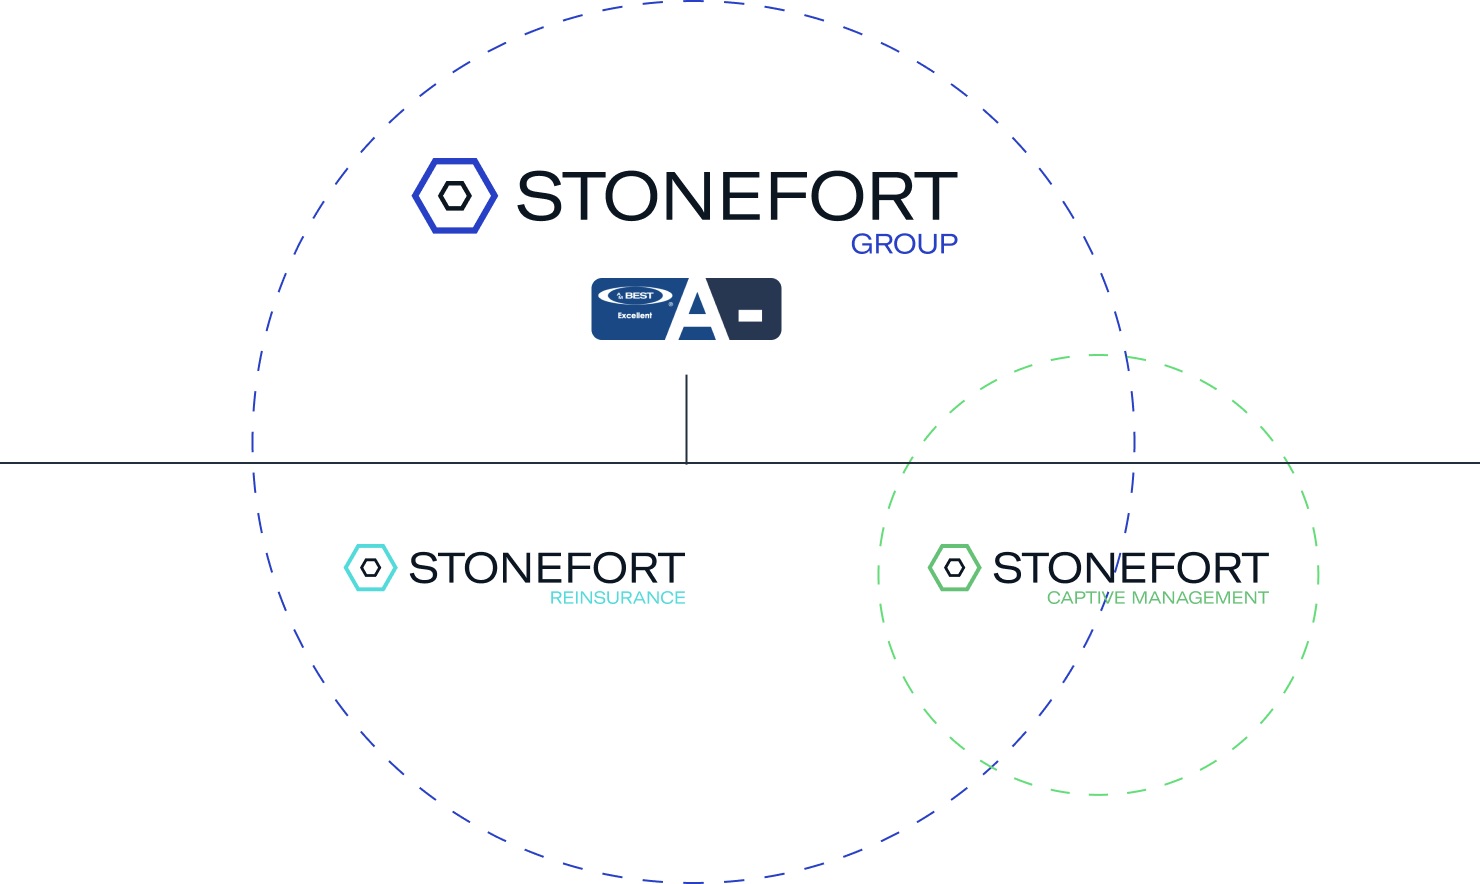 Schema of Stonefort Group